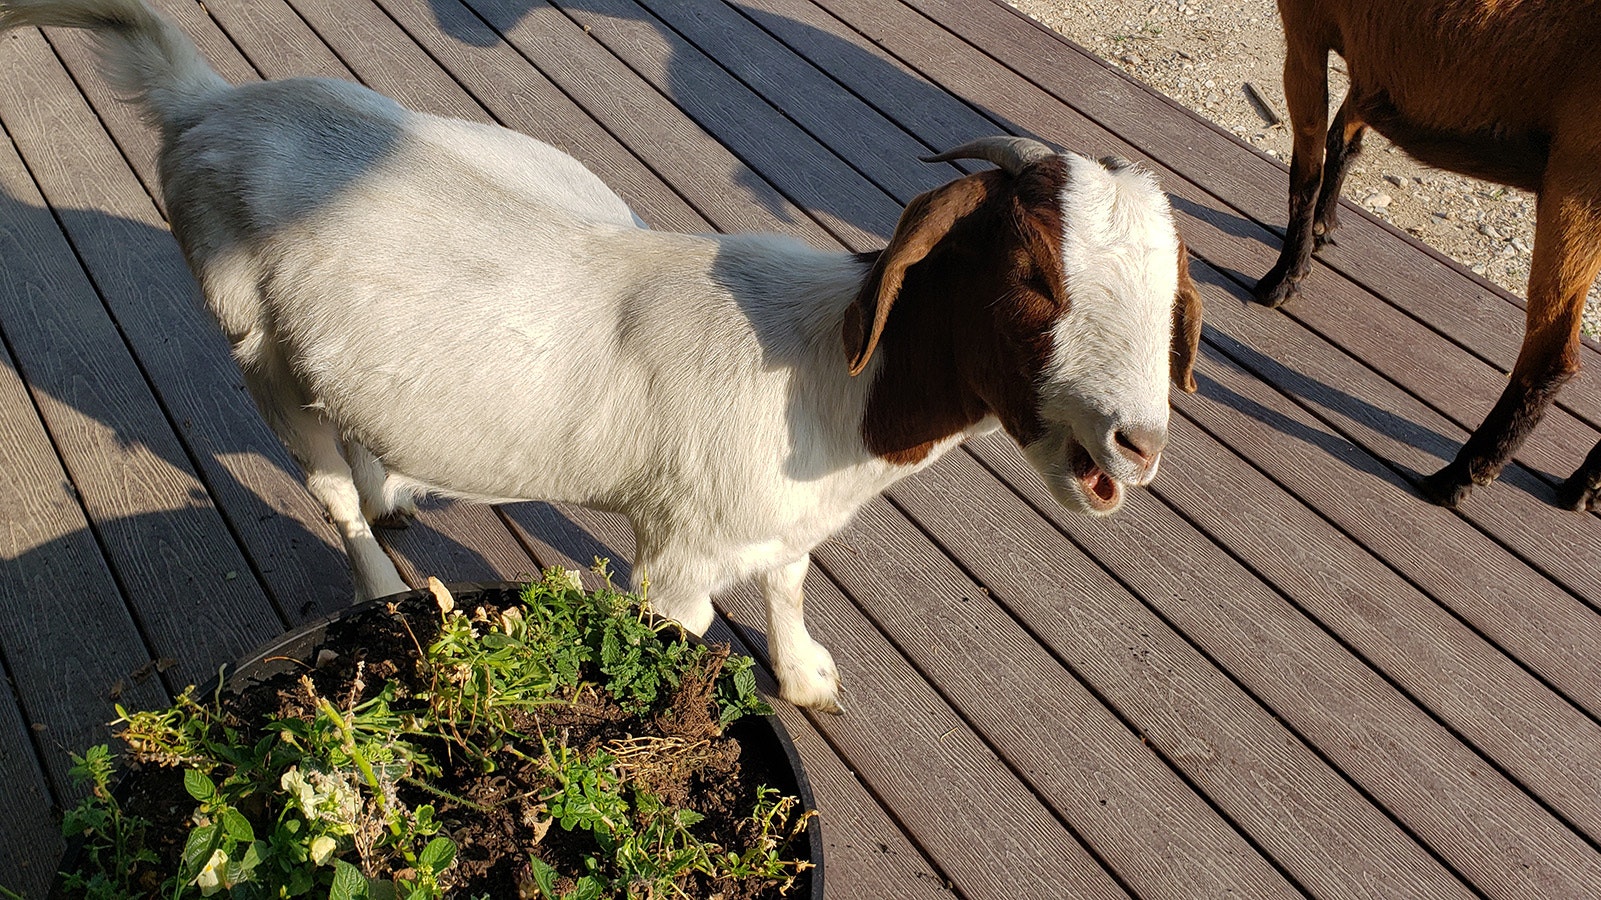 A goat enjoys a few petunias from the planter.